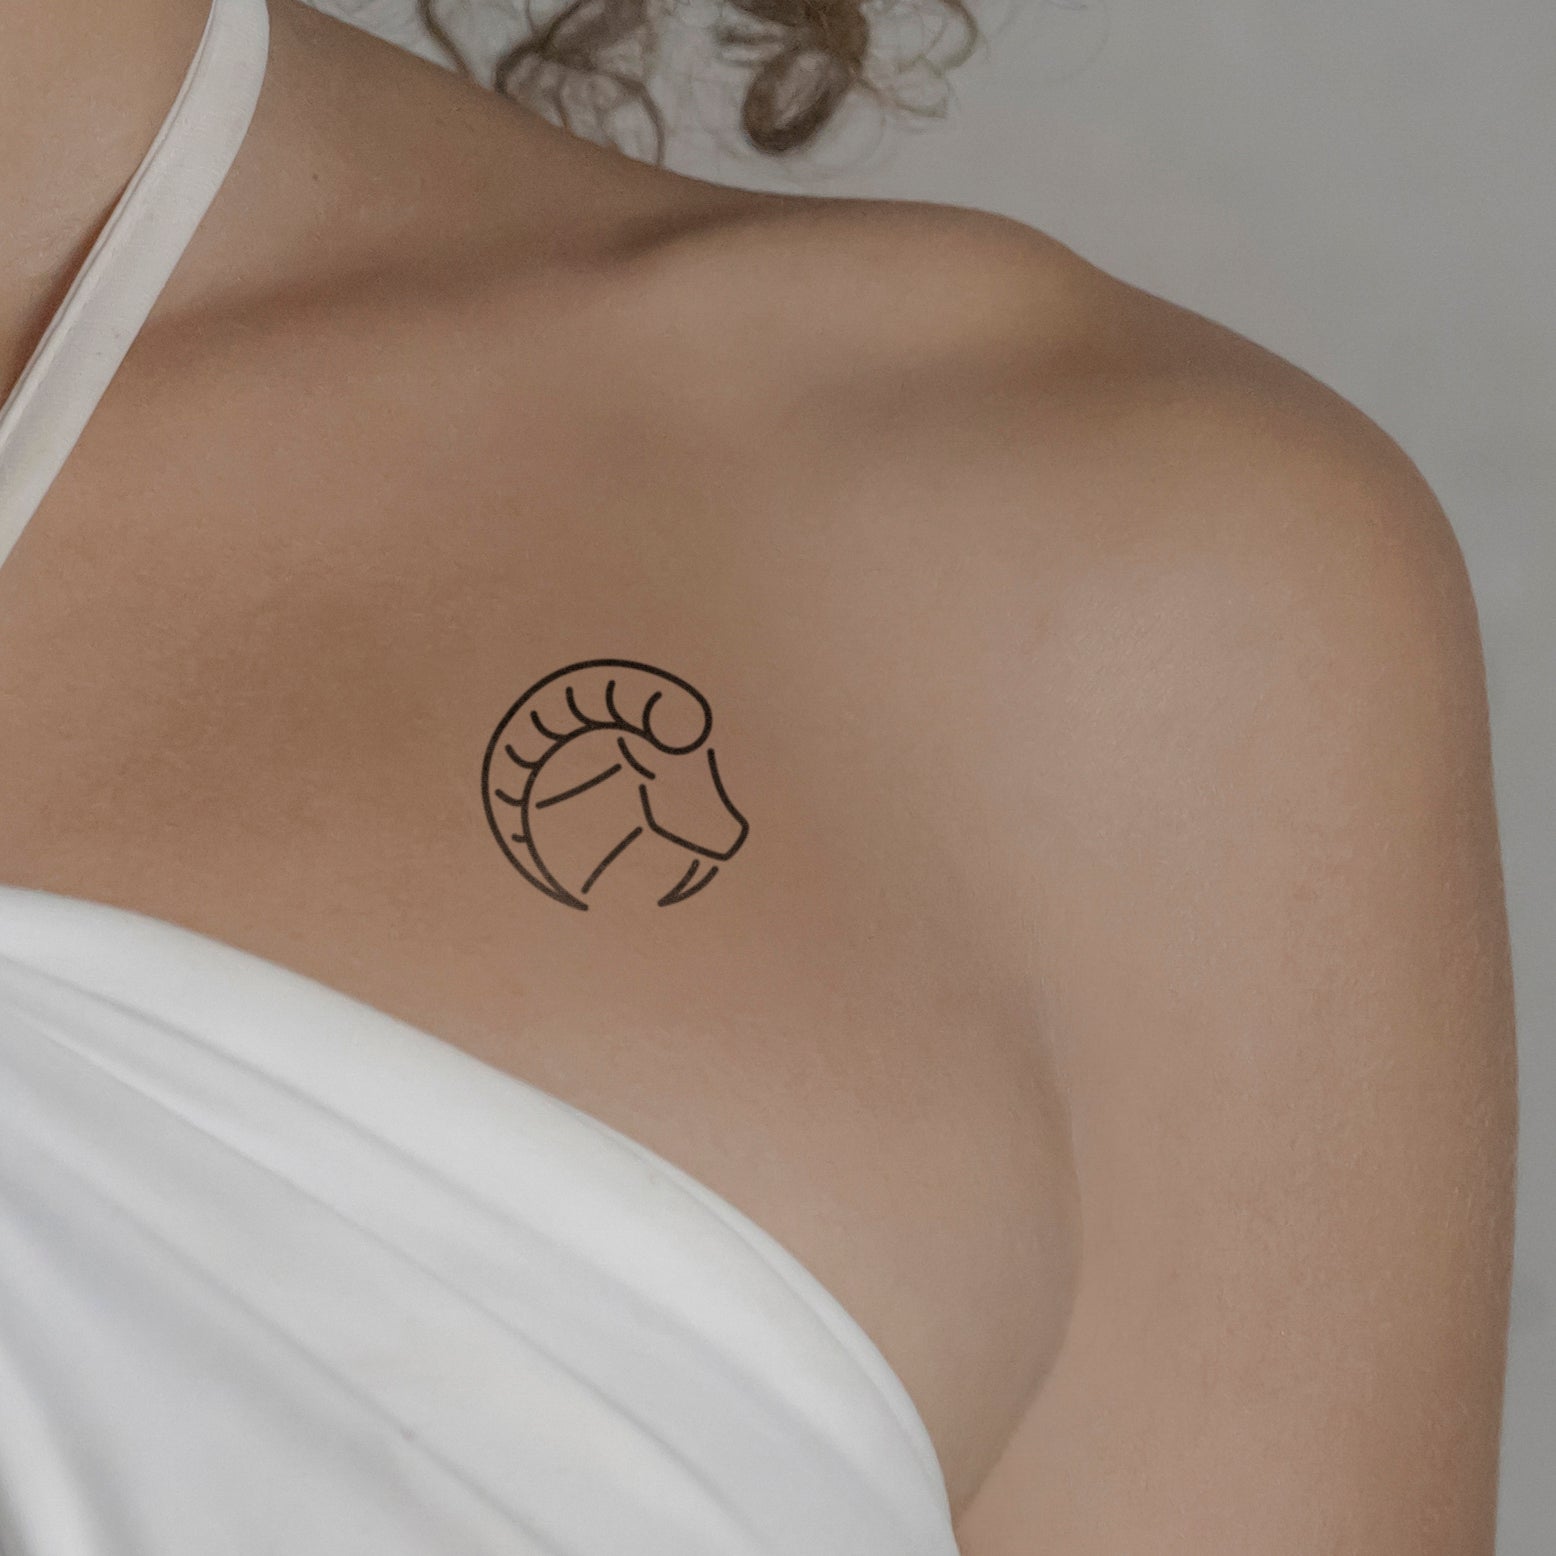 Capricorn tattoo for trendsetters | Temporary tattoos - minink